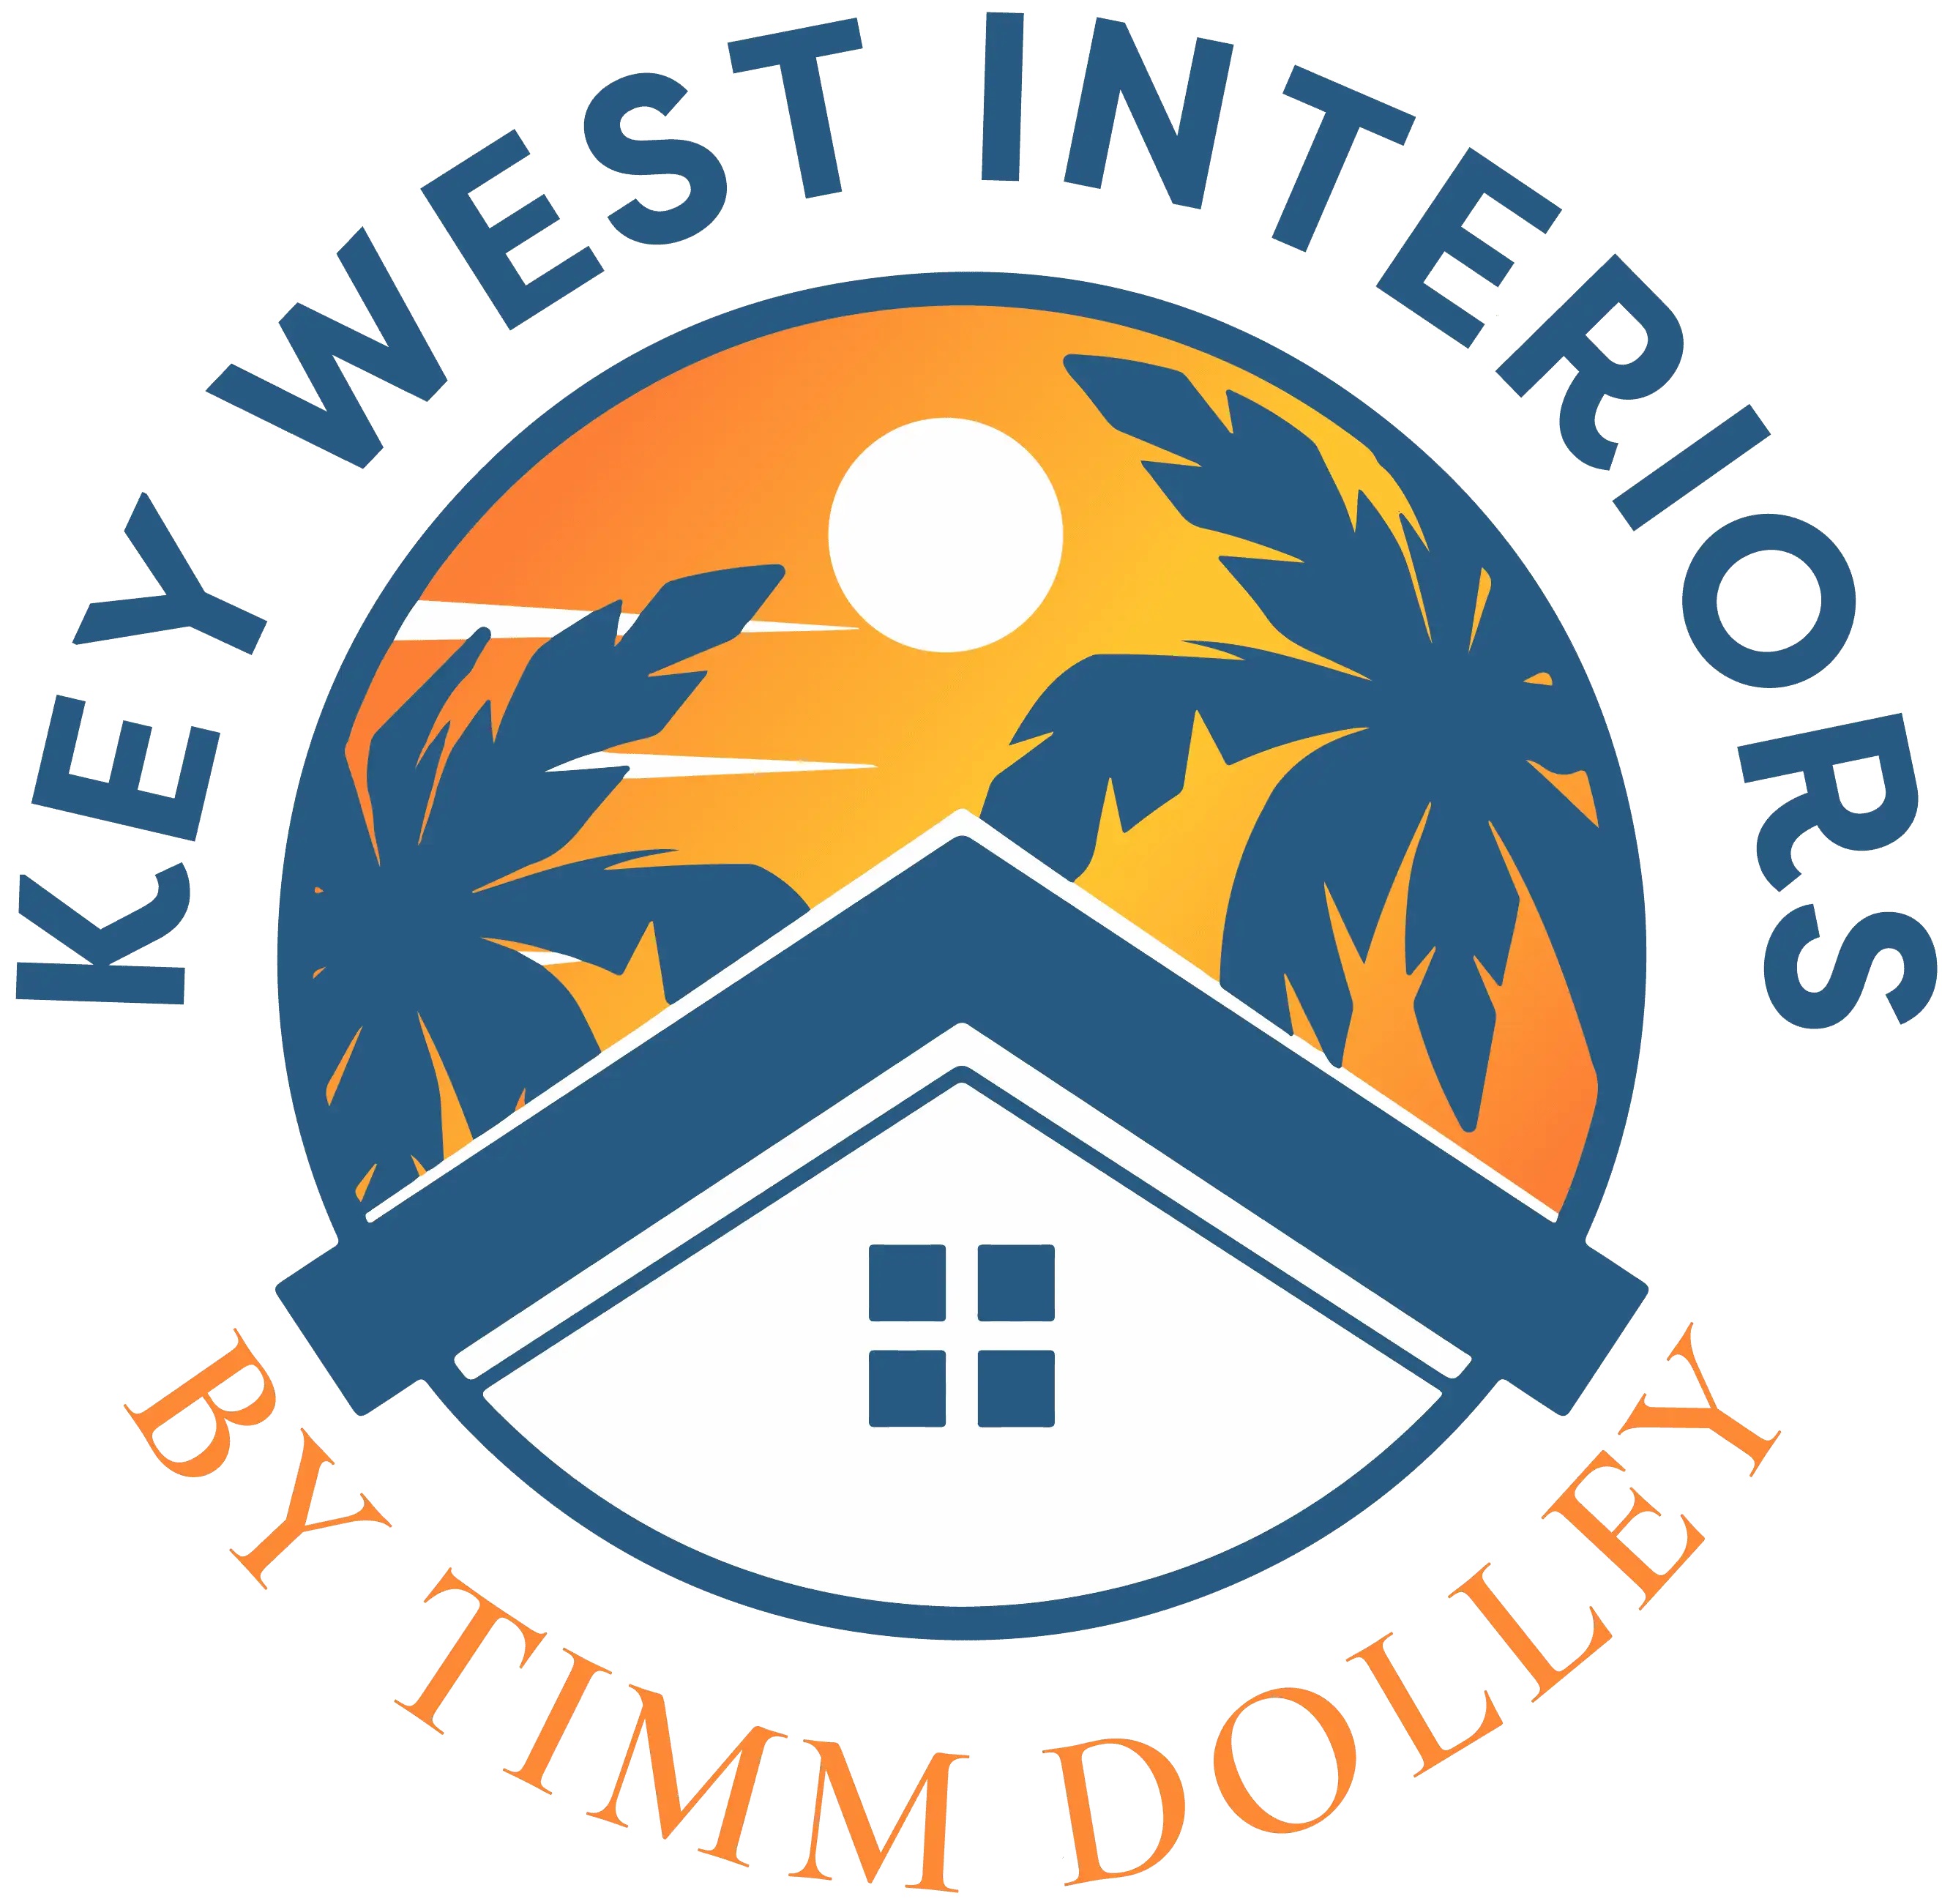 Key West Interiors